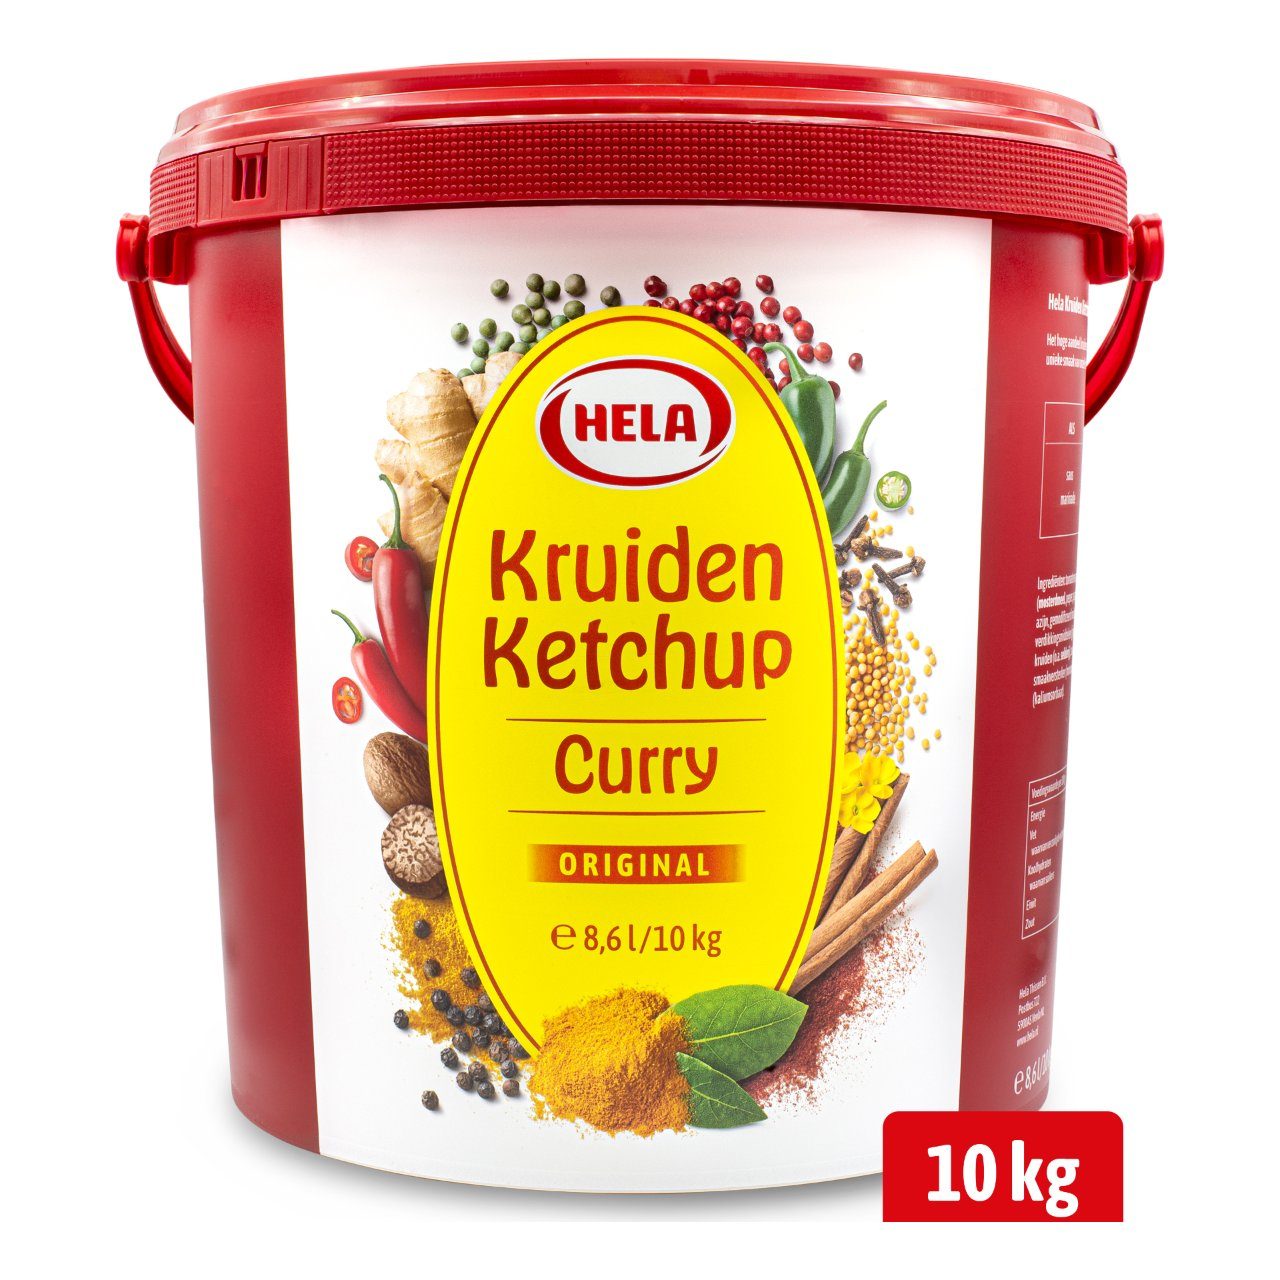 Curry kruiden ketchup original